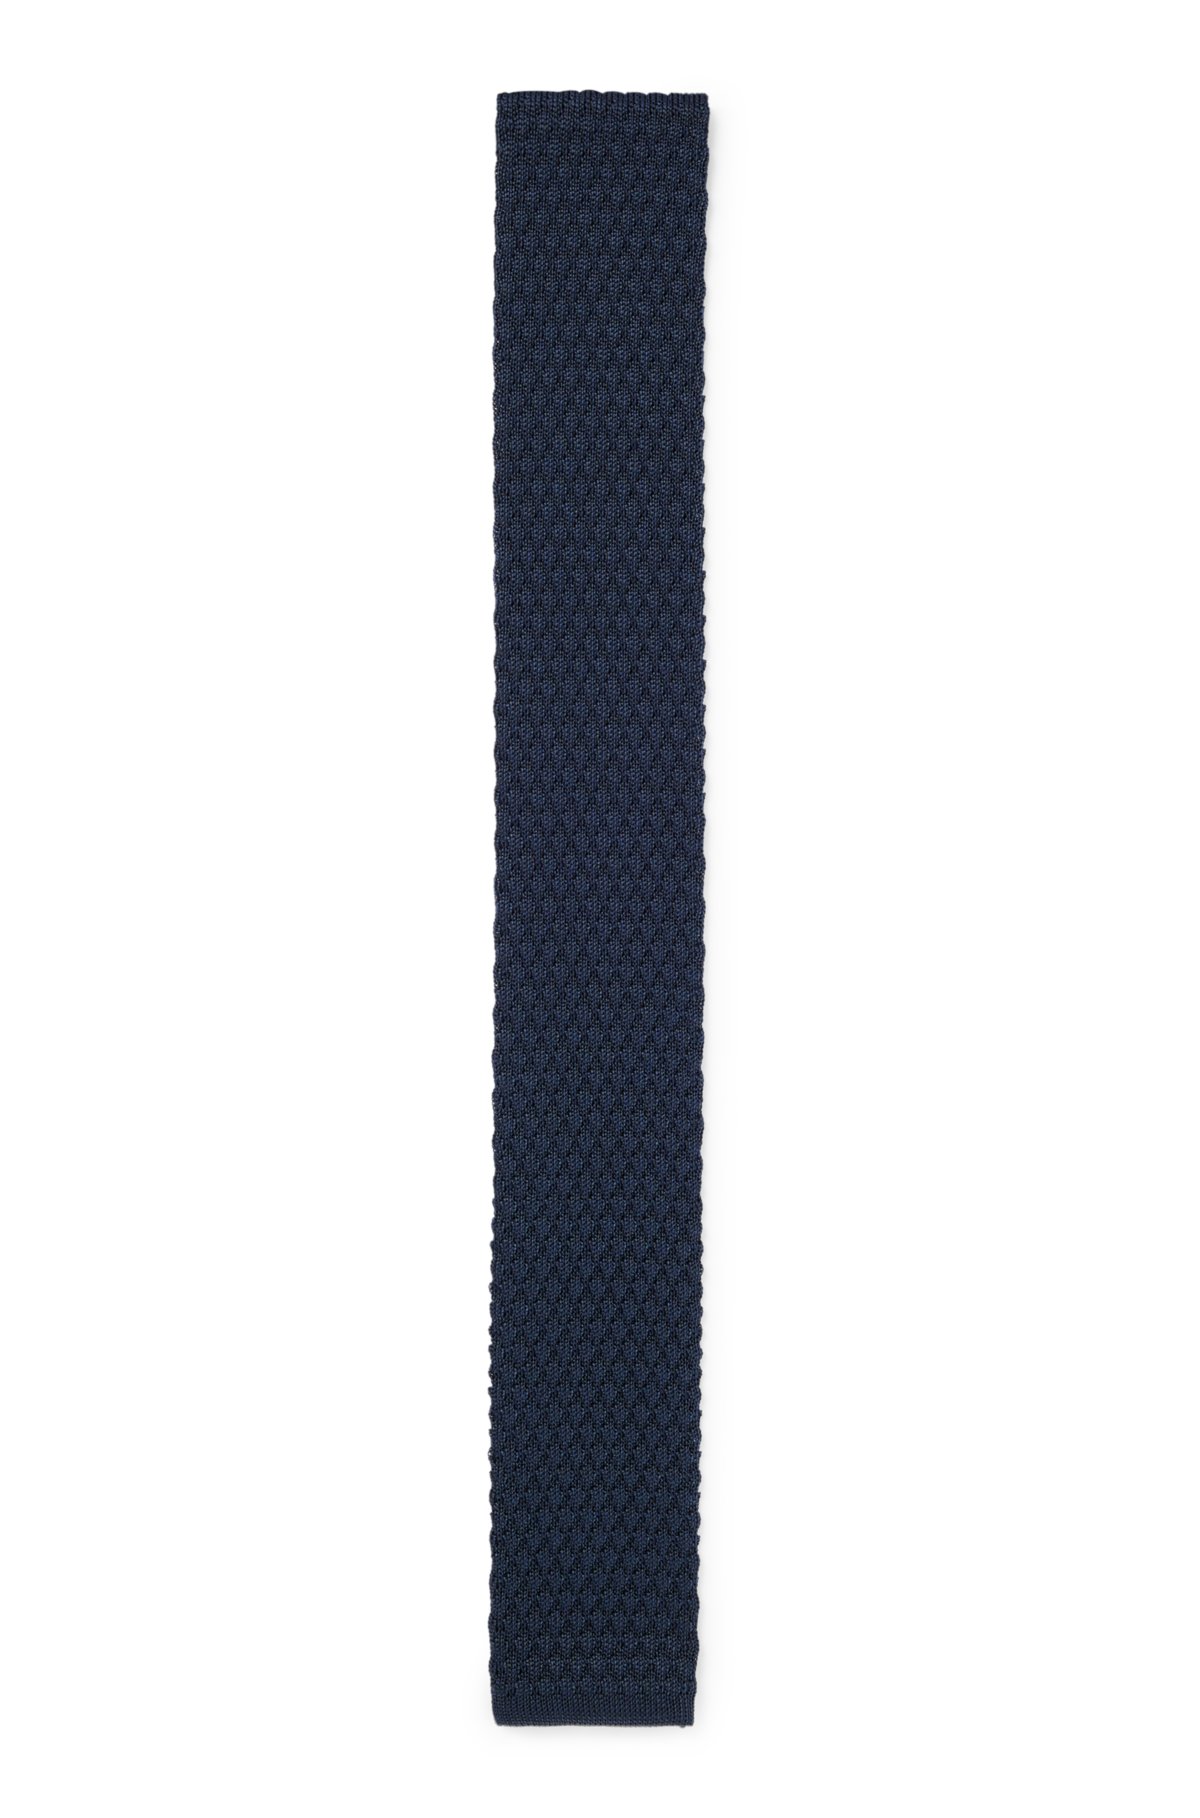 BOSS - Krawatte aus Jacquard-Struktur Seide mit reiner